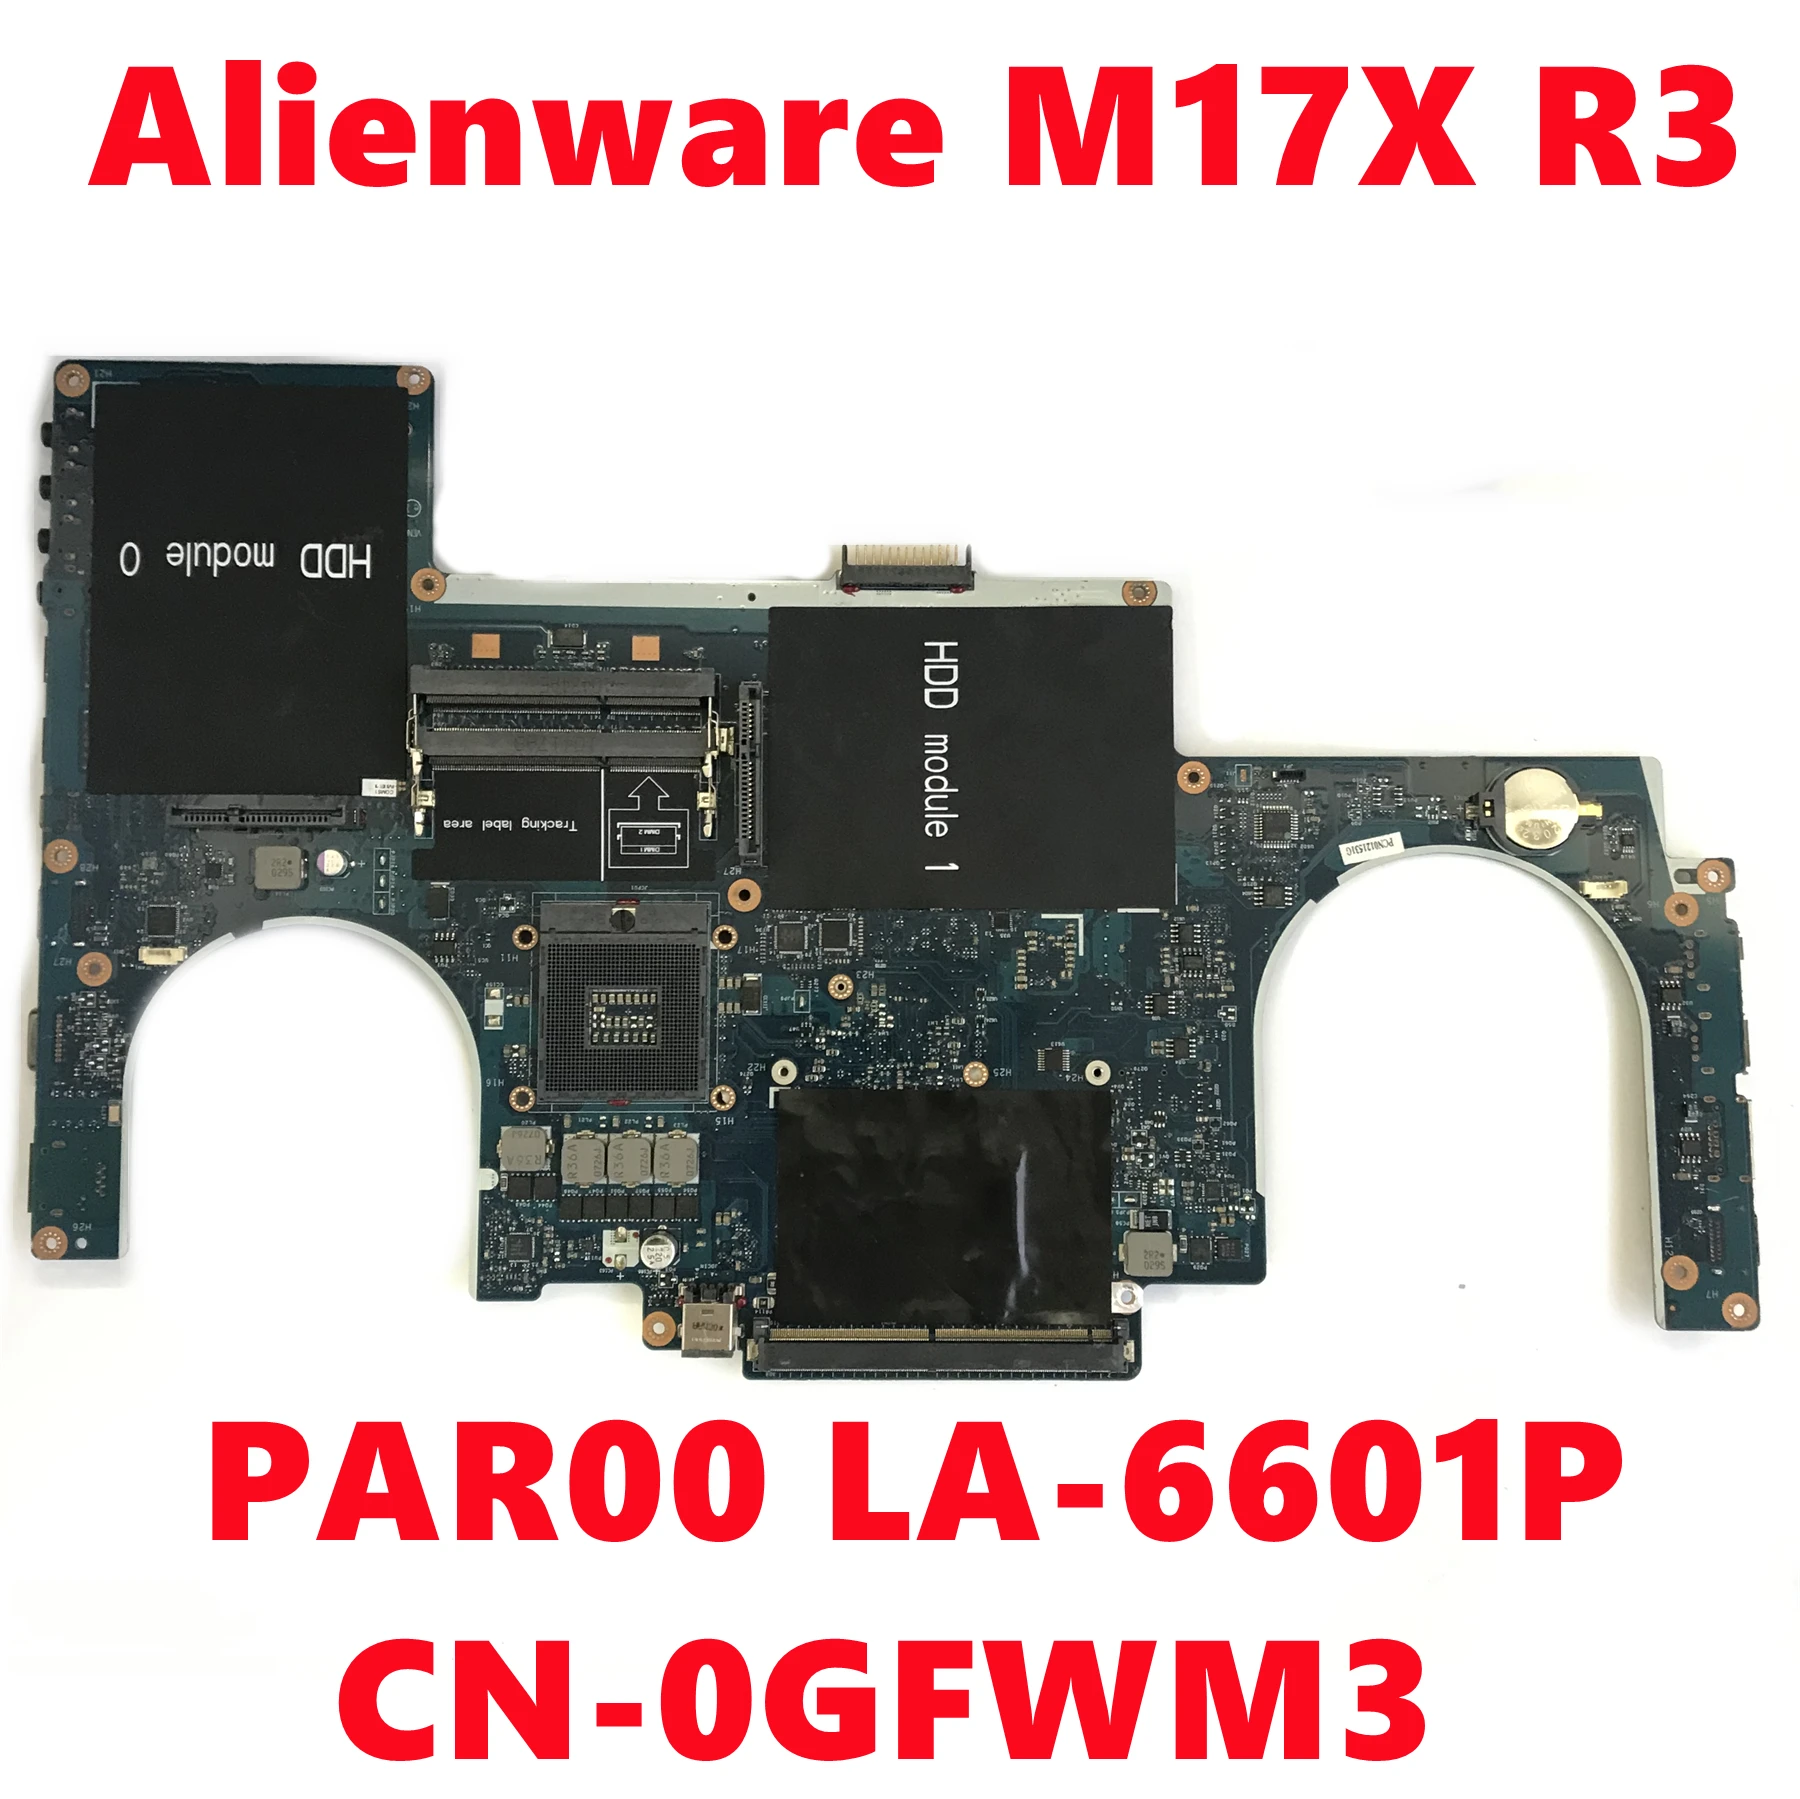 

CN-0GFWM3 0GFWM3 GFWM3 For Dell Alienware M17X R3 Laptop Motherboard PAR00 LA-6601P Mainboard HM67 DDR3 100% Fully Test Working